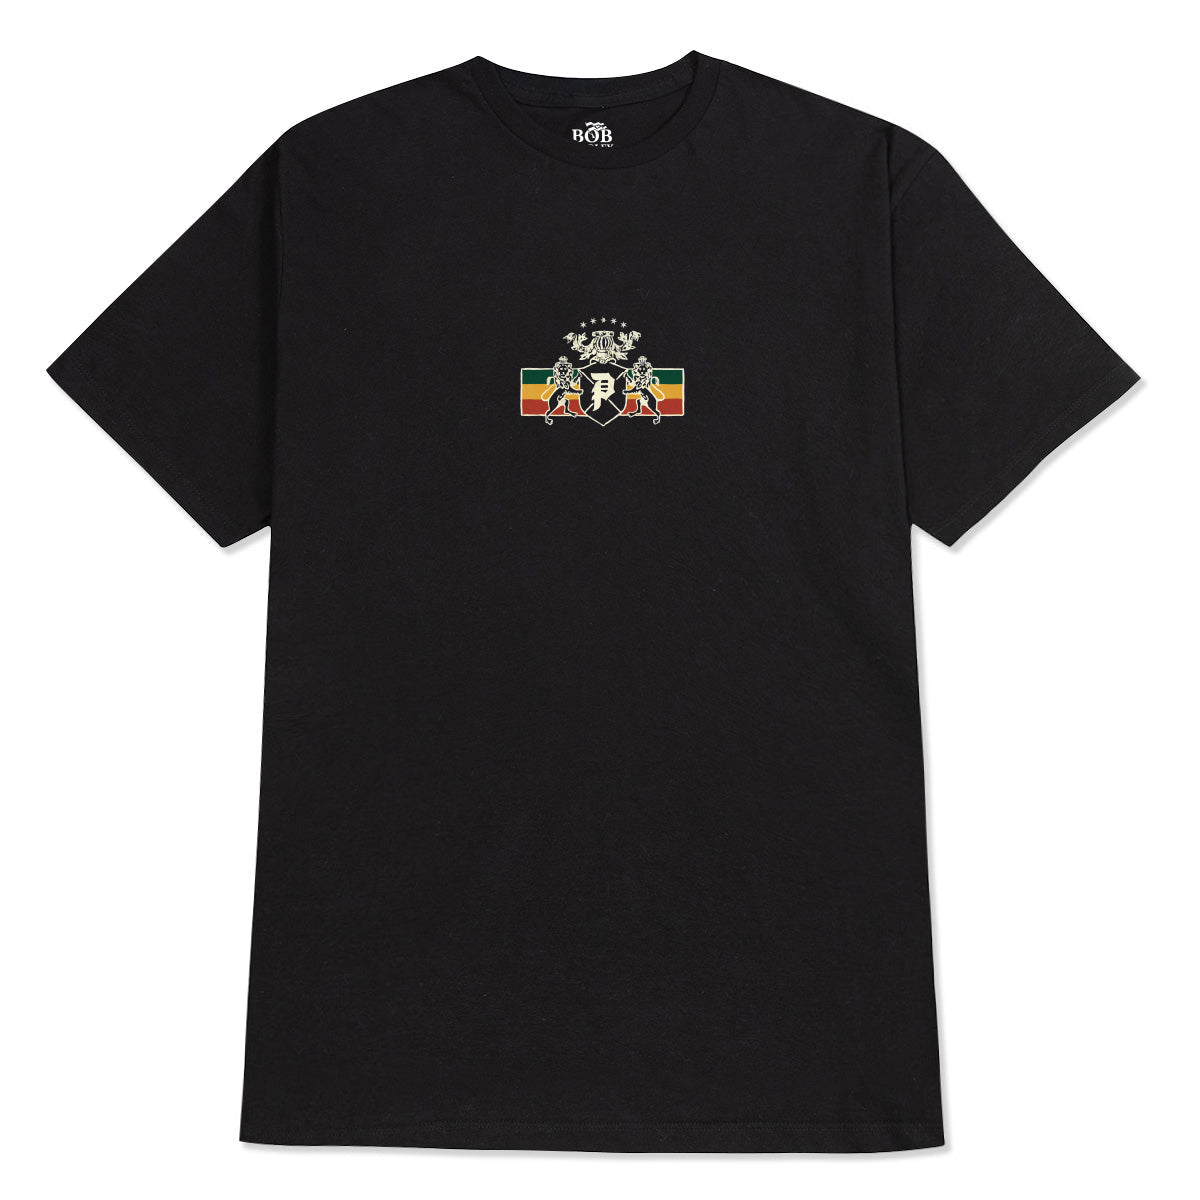 Primitive x Bob Marley Heritage T-Shirt - Black image 2